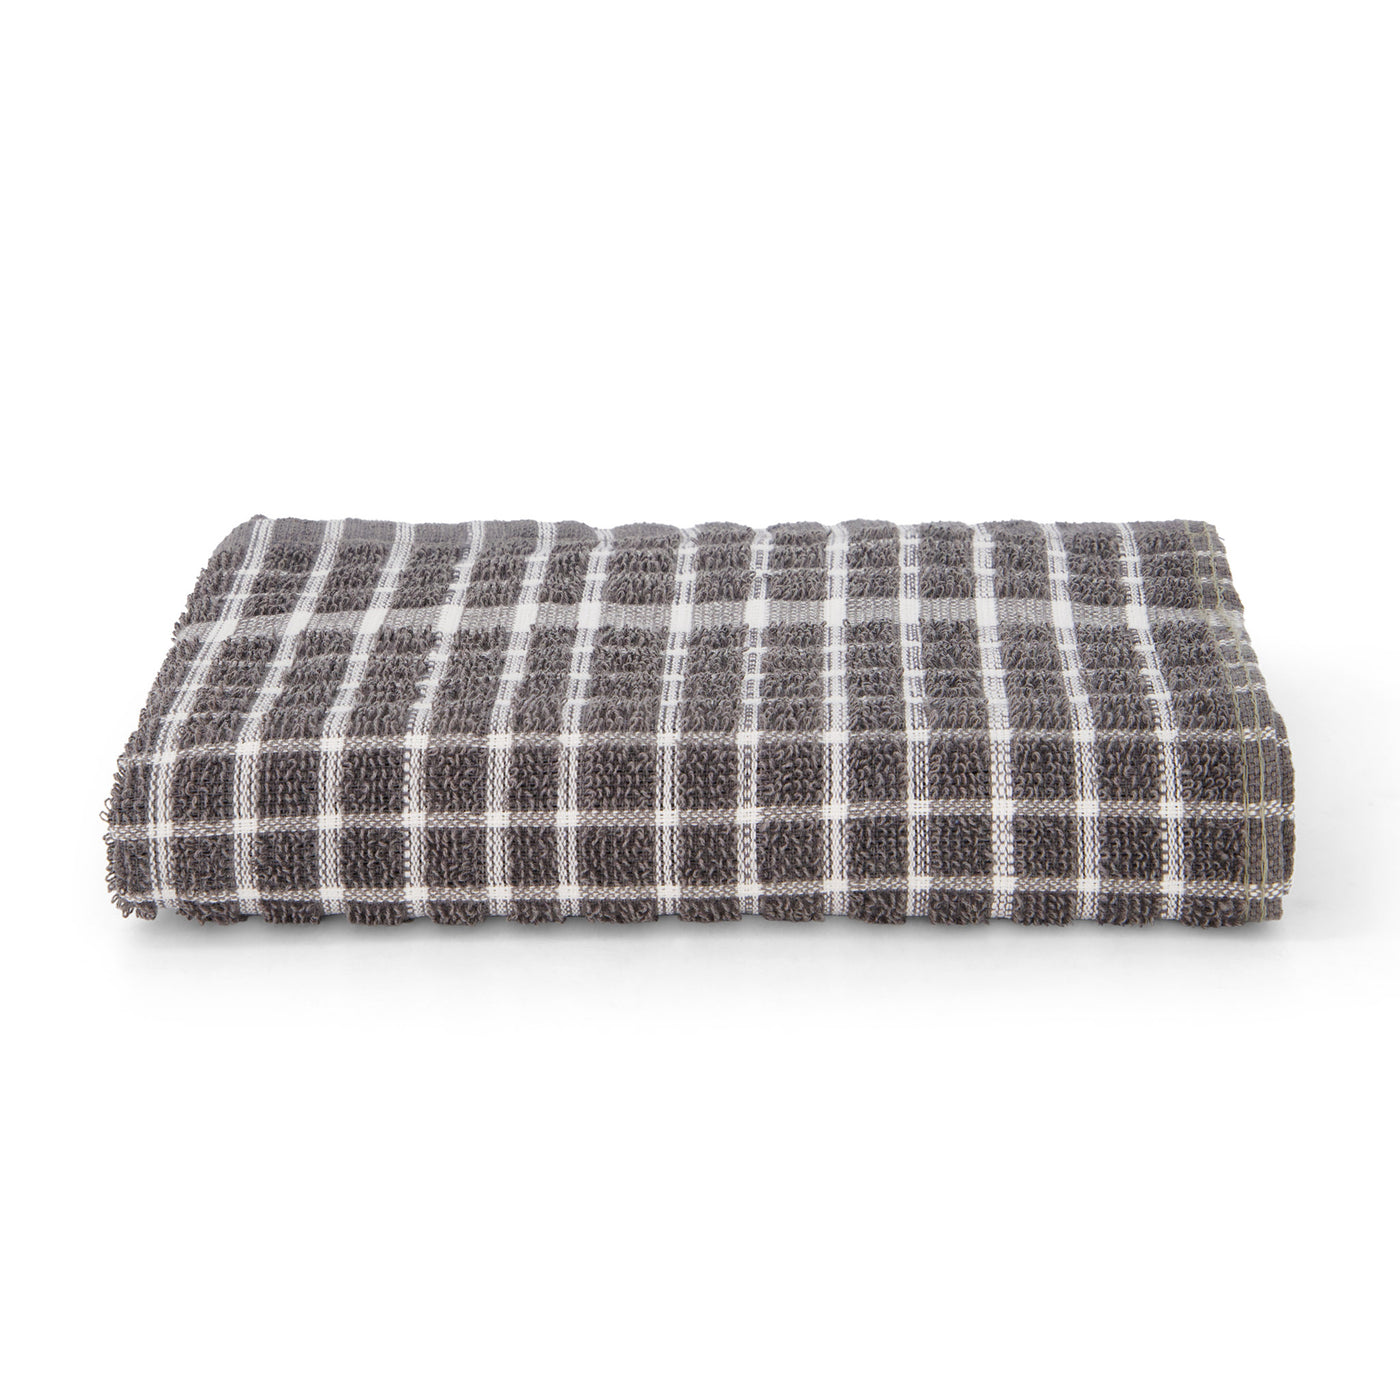 Commercial Grade Tea Towel, Image of grey checkered tea towel